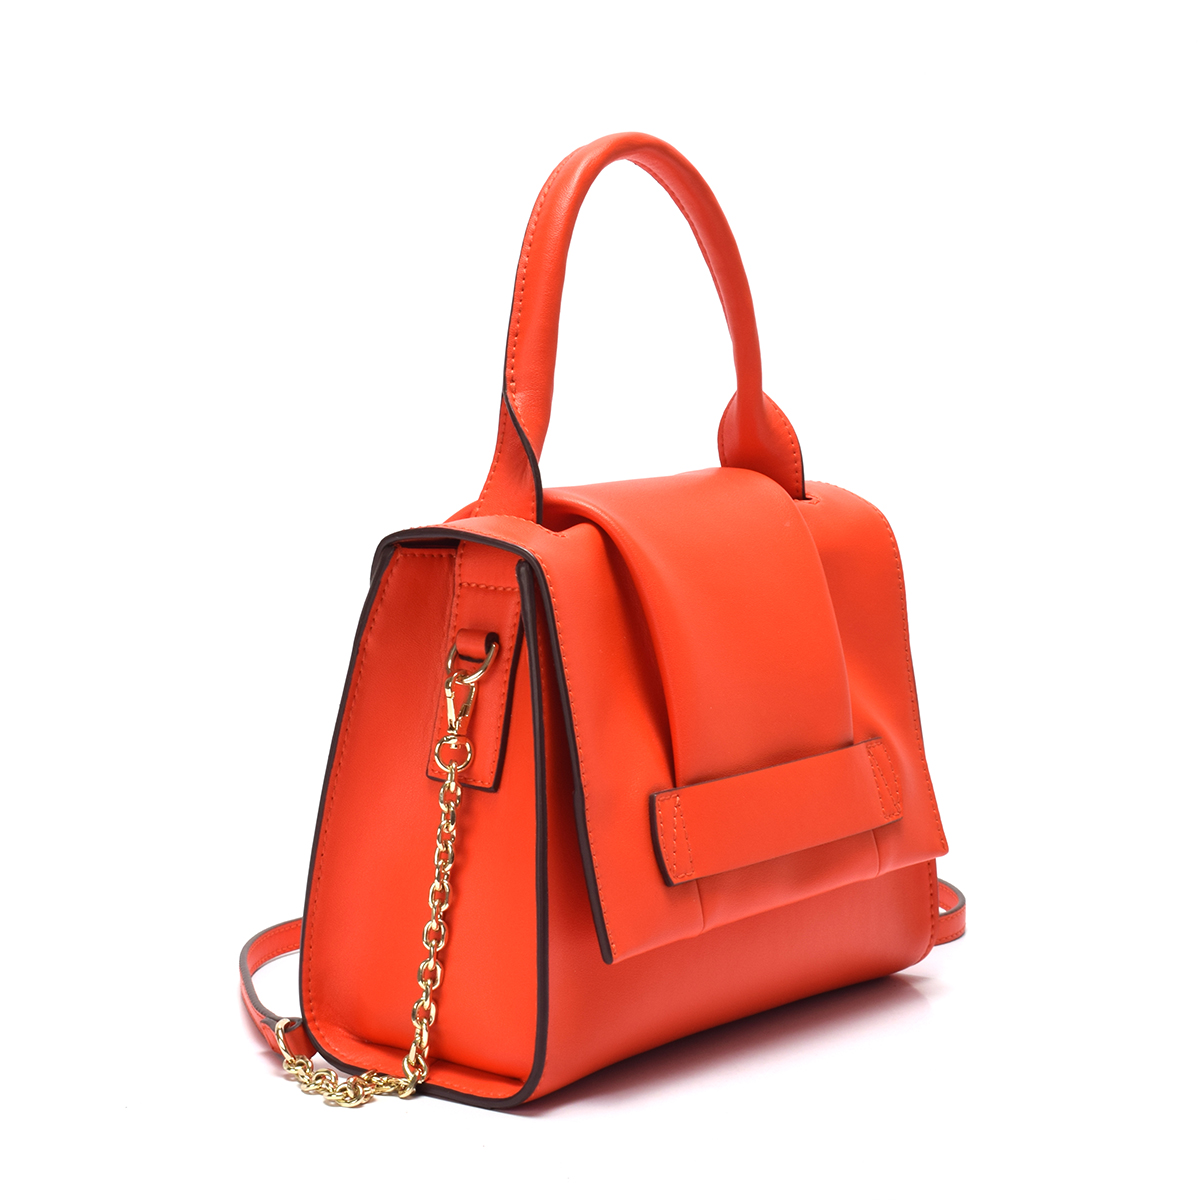 Sanlly suede large black leather handbag buy now for girls-1